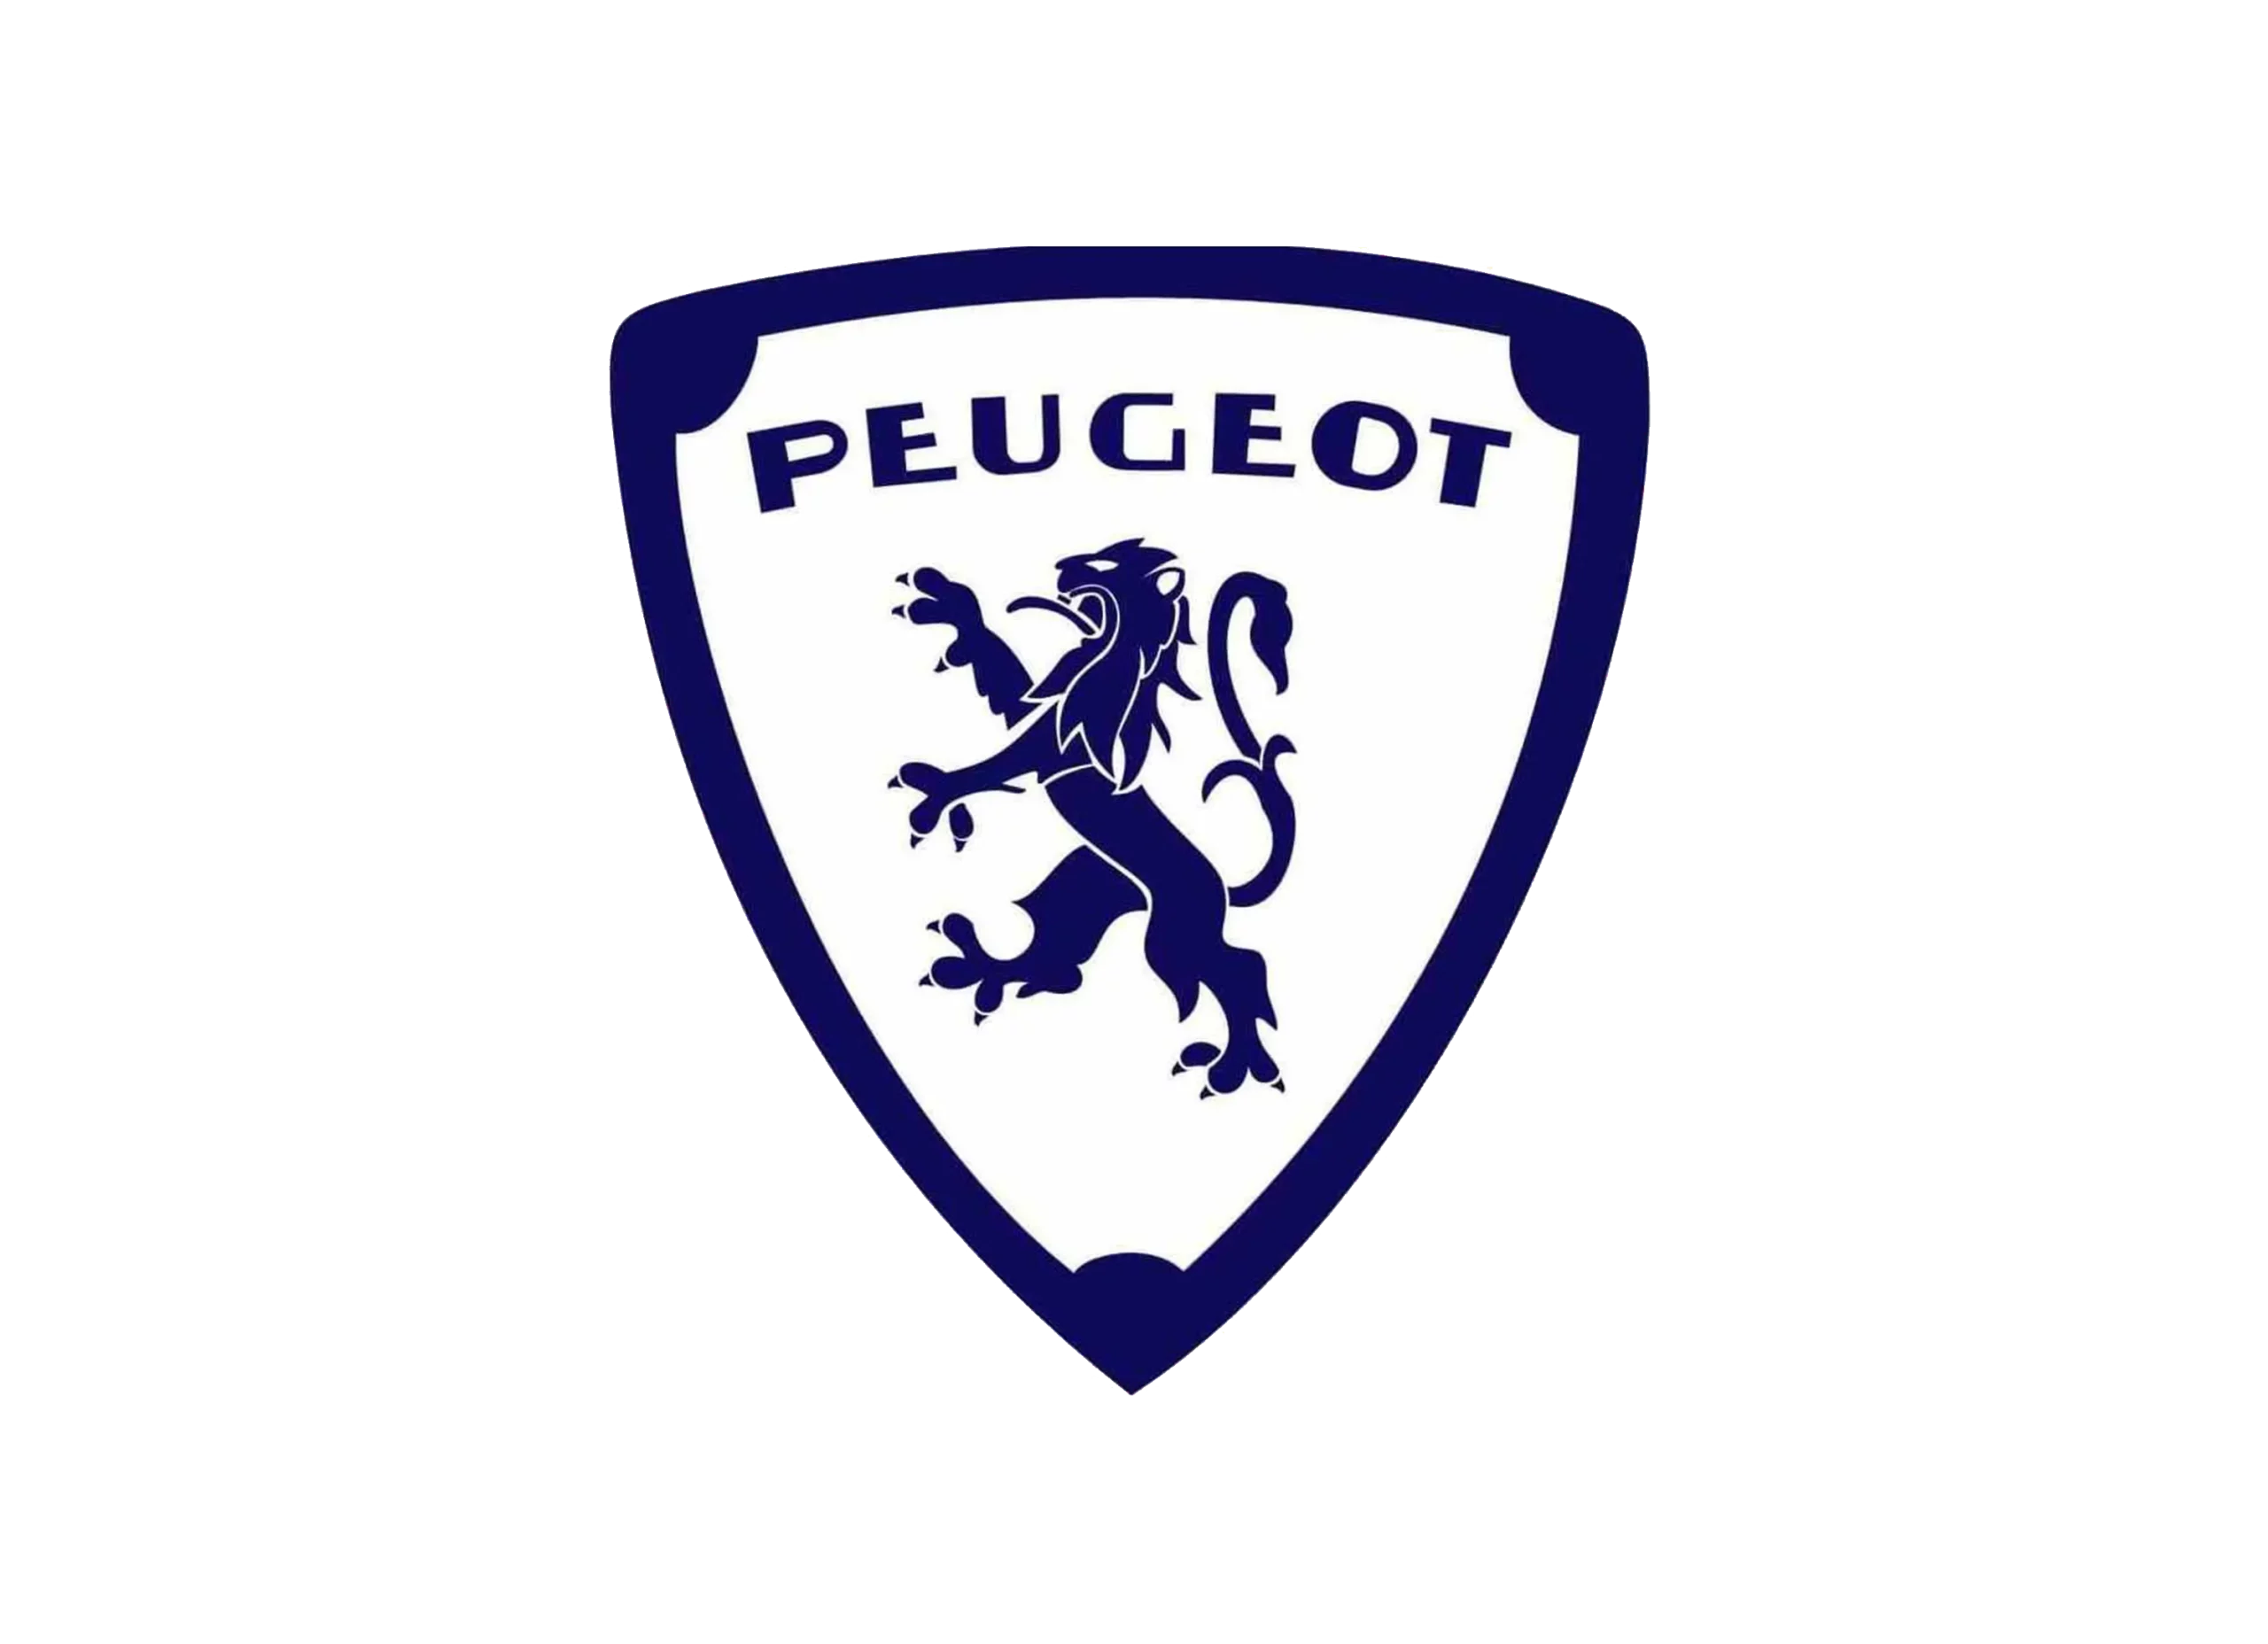 Peugeot logo 1955-1960